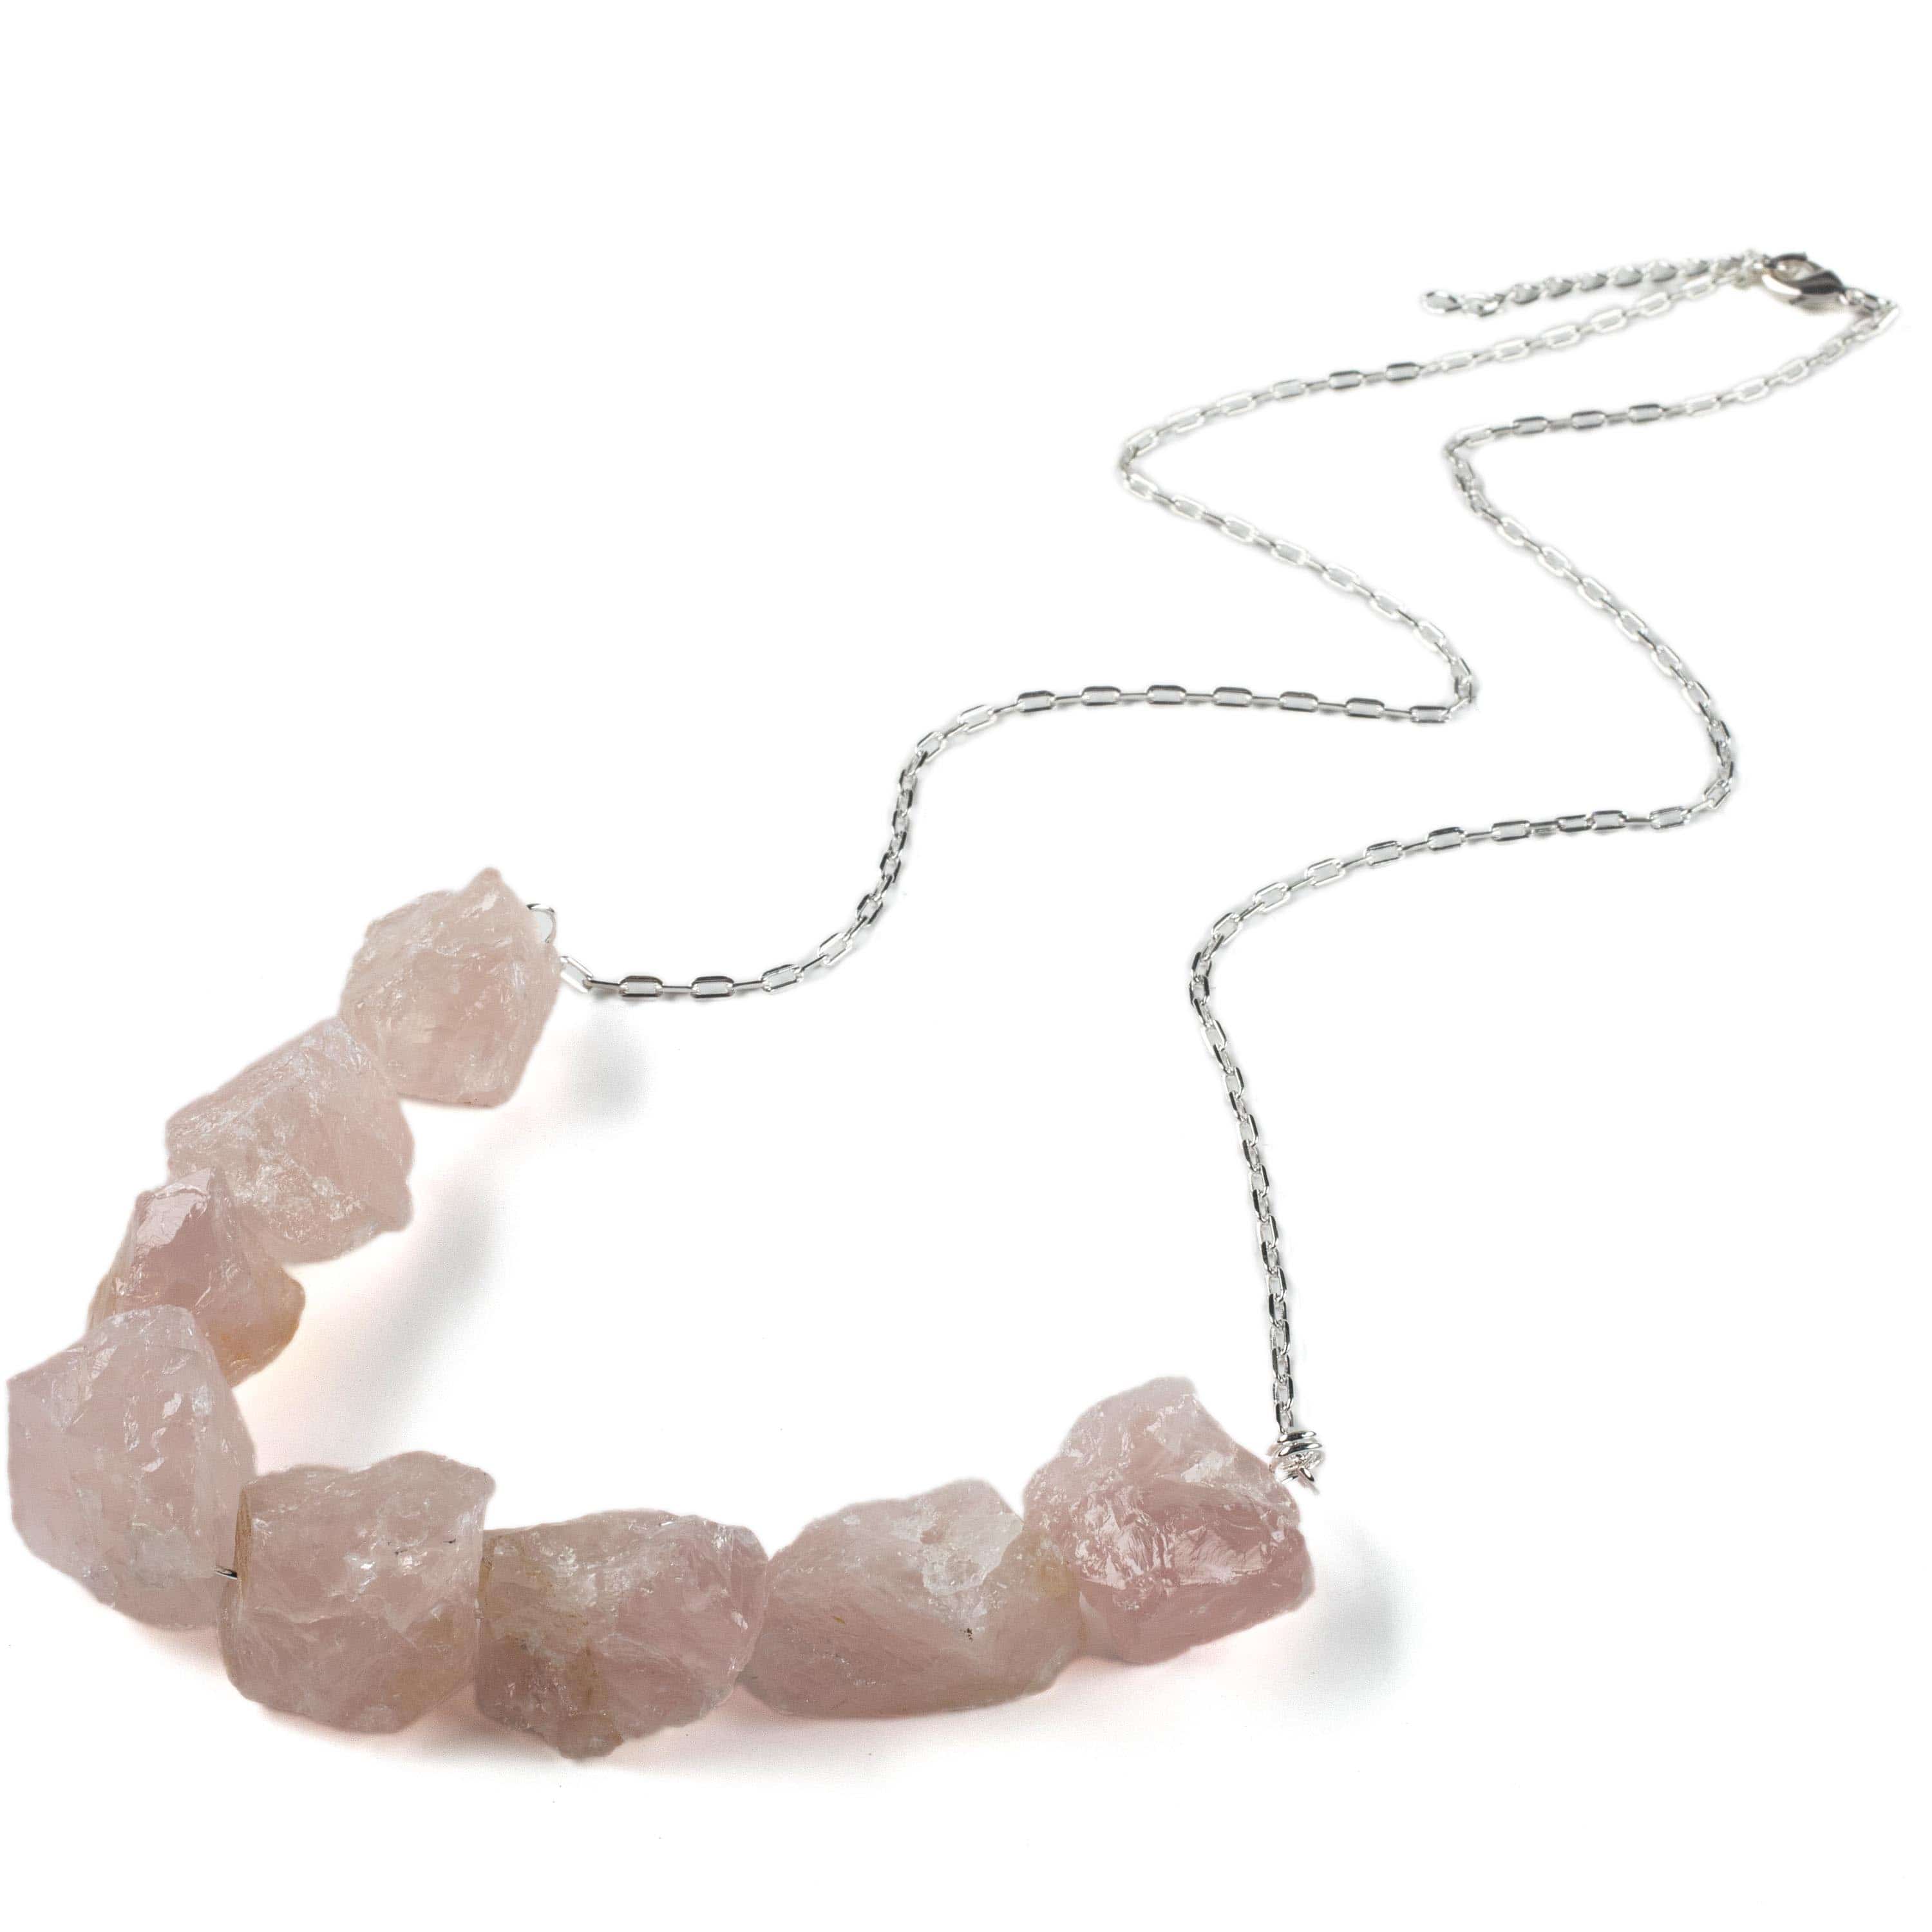 Kalifano Crystal Jewelry Rough Rose Quartz Necklace CJN-2046-RQ